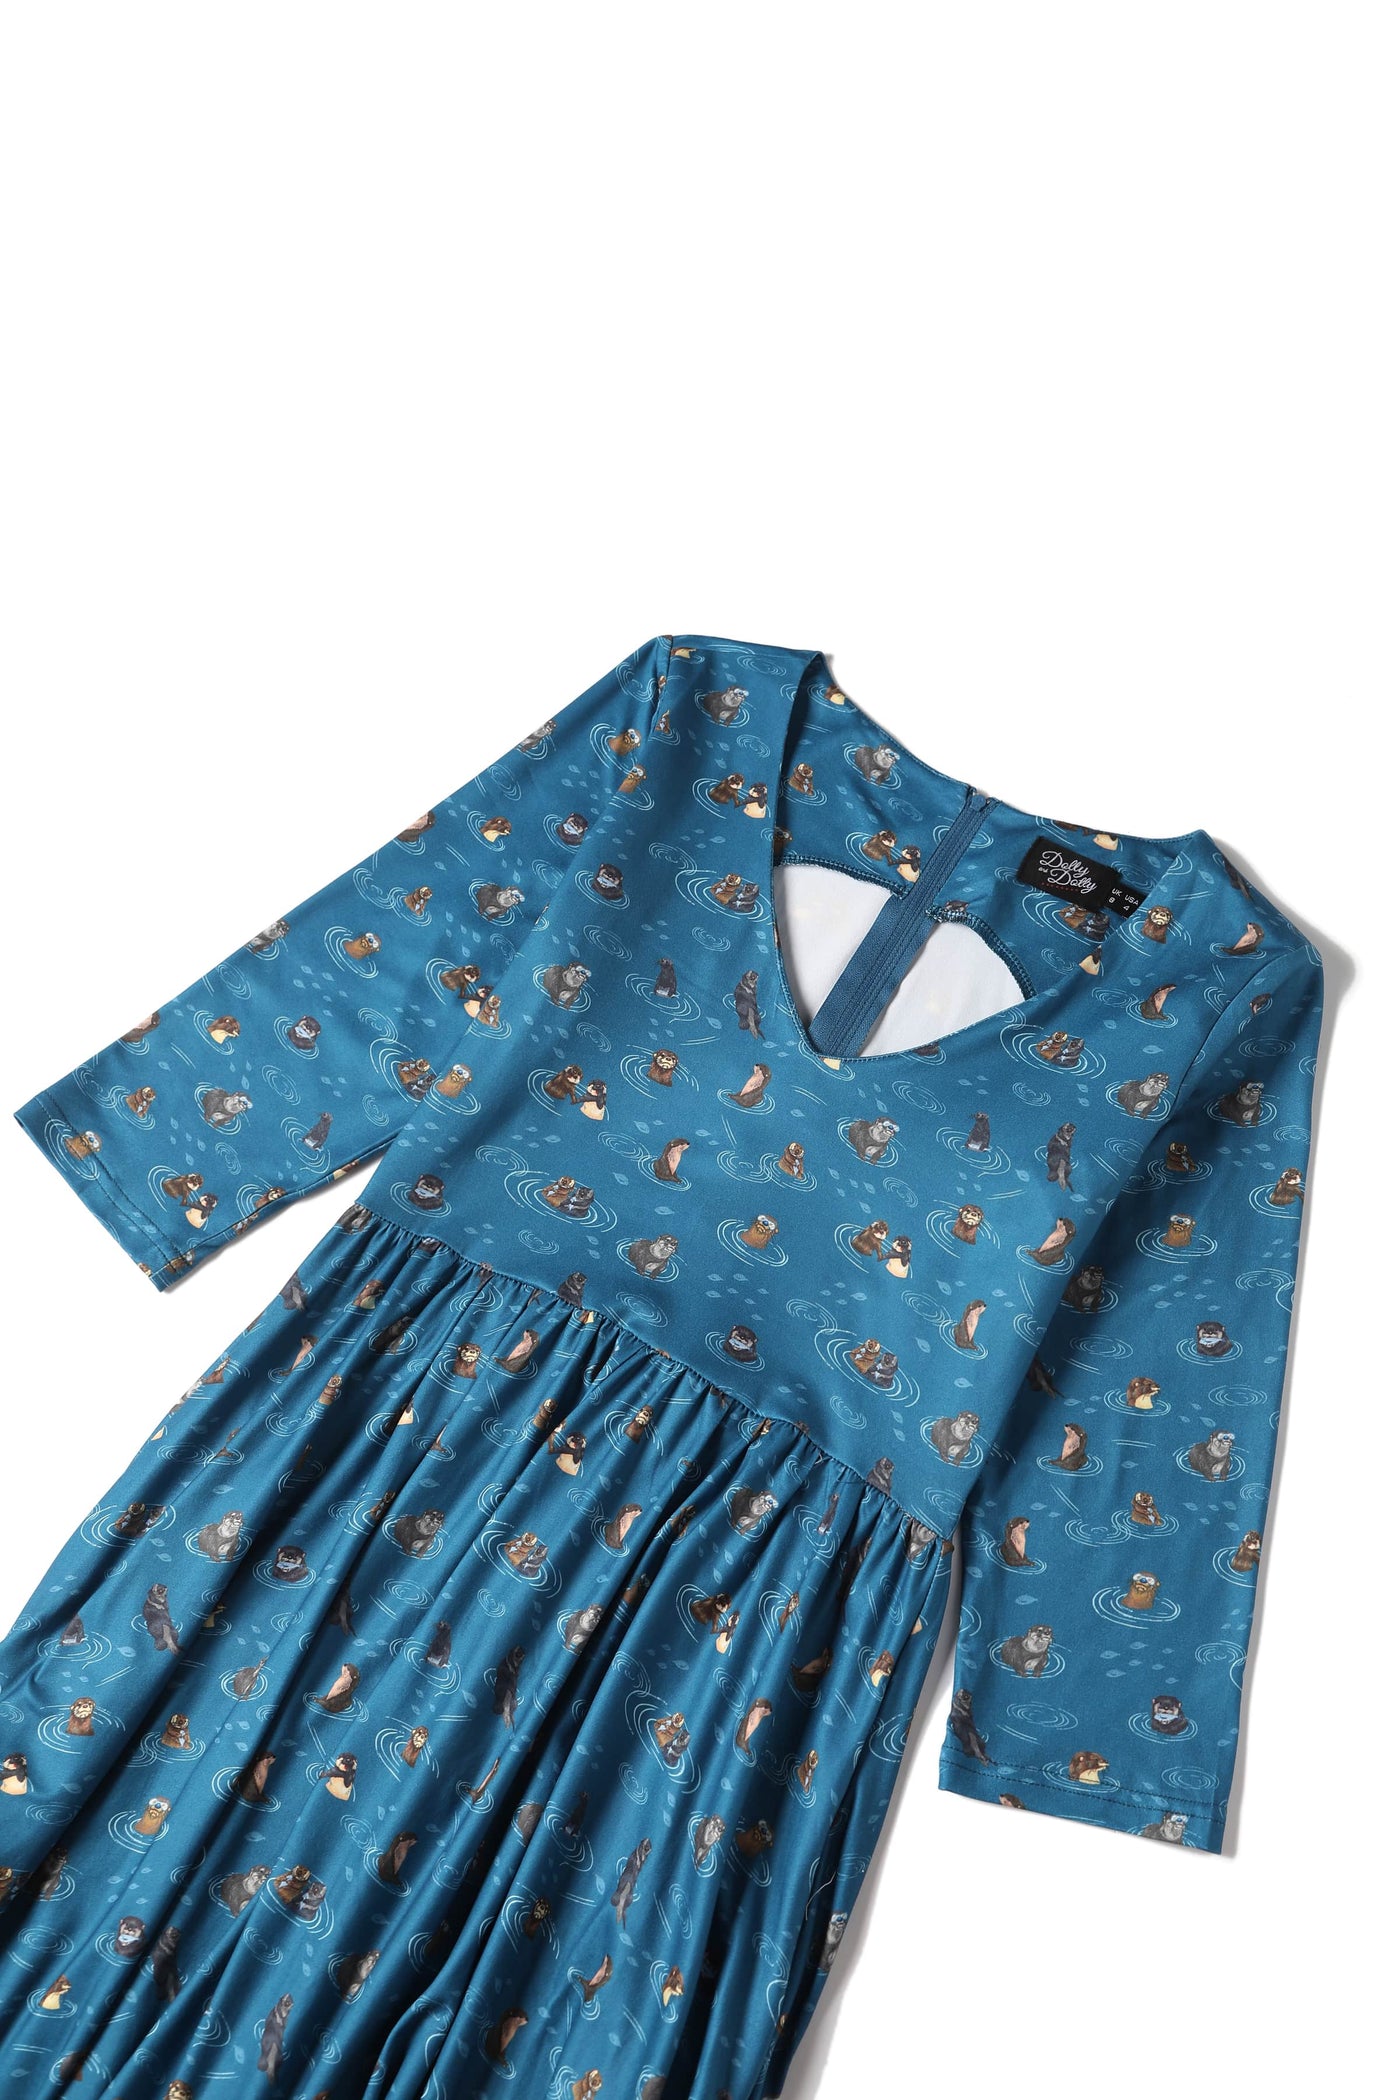   billie long sleeved blue otter family dress bodice close up